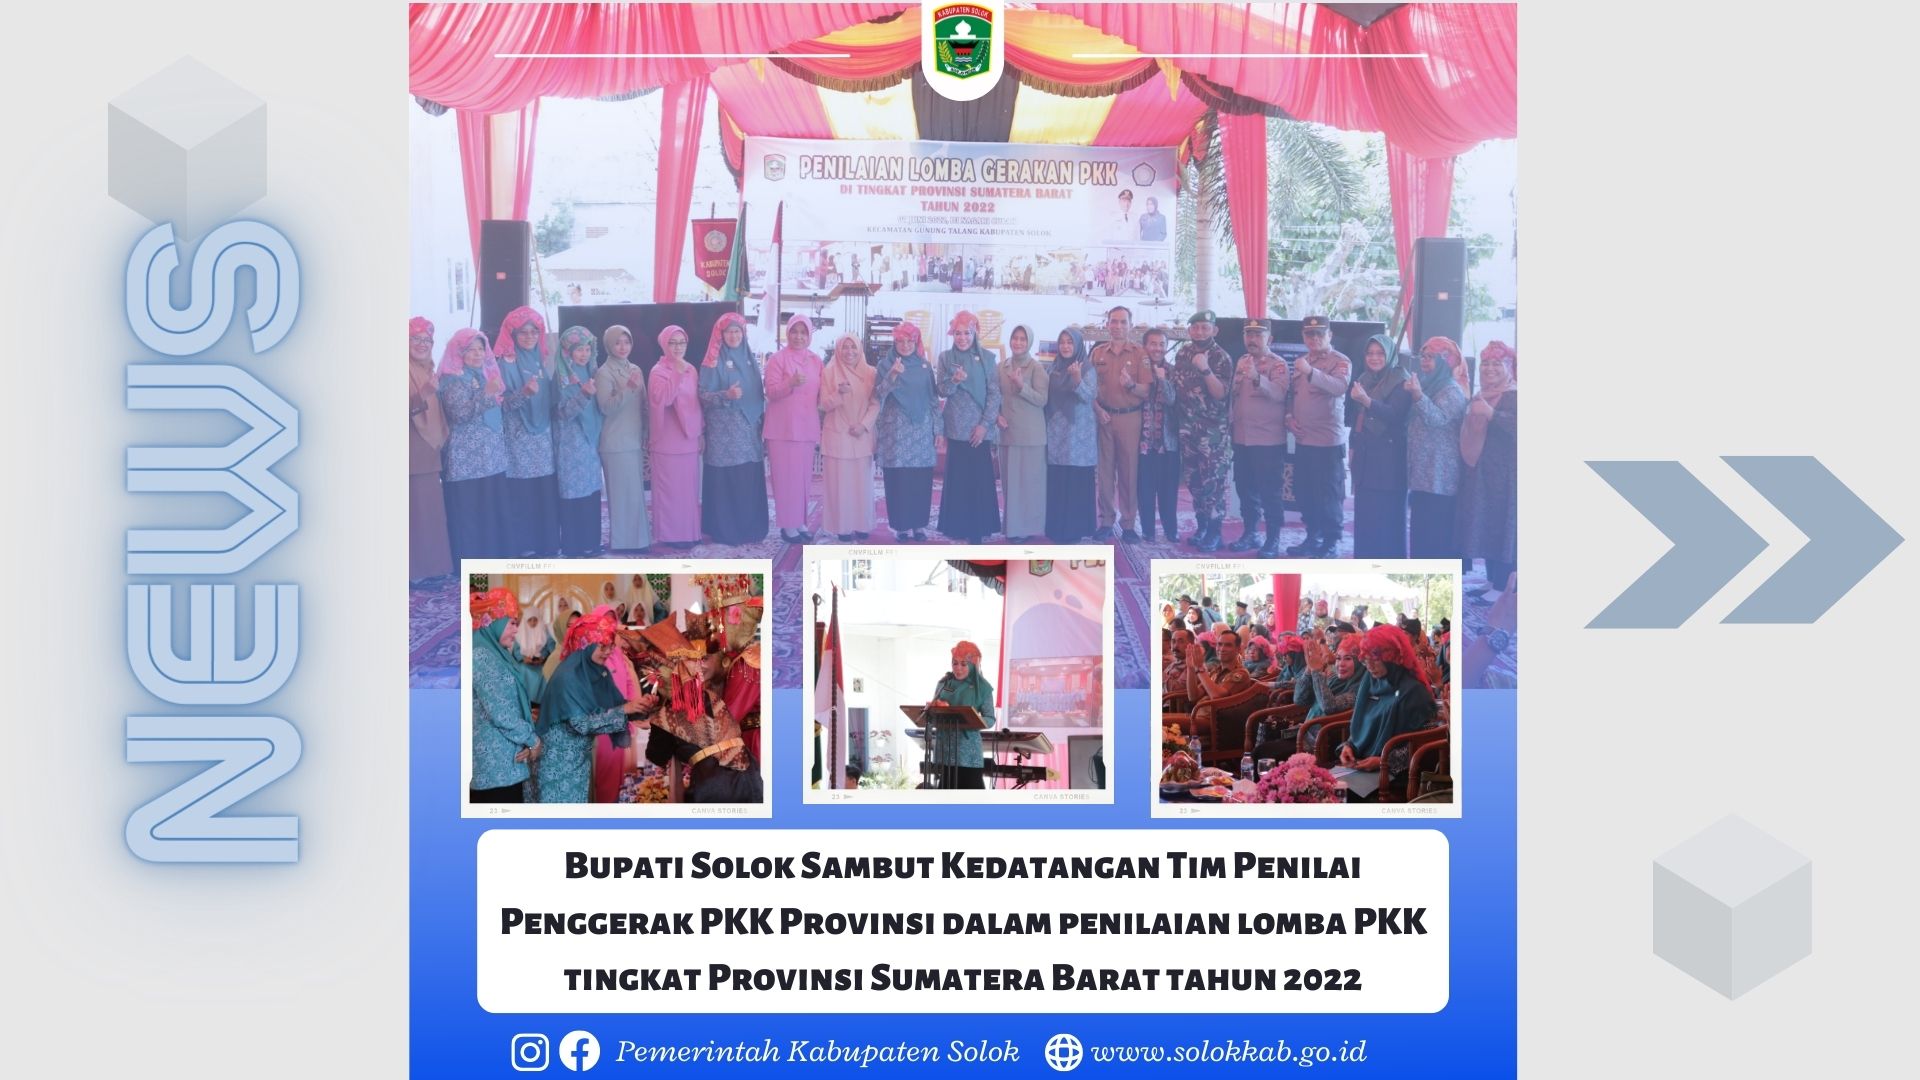 Bupati Solok Sambut Kedatangan Tim Penilai Penggerak PKK Provinsi dalam penilaian lomba PKK tingkat Provinsi Sumatera Barat tahun 2022